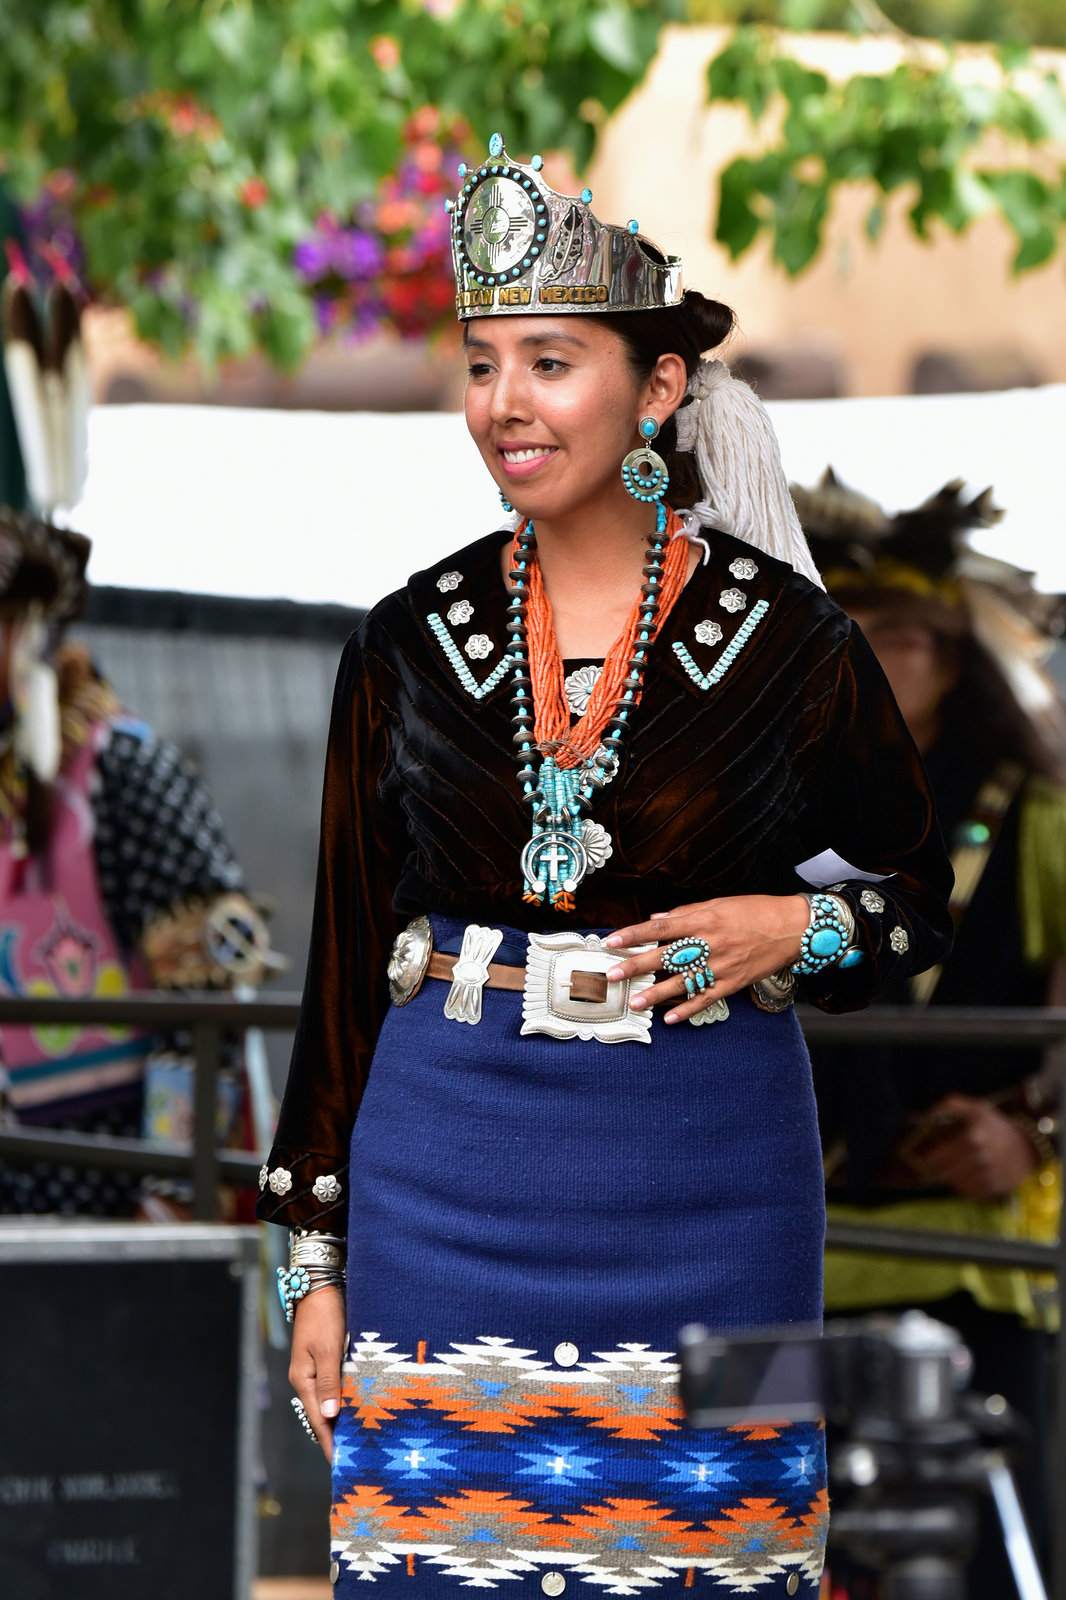 native american clothing7 Native American Clothing Contest at Santa Fe Indian Market